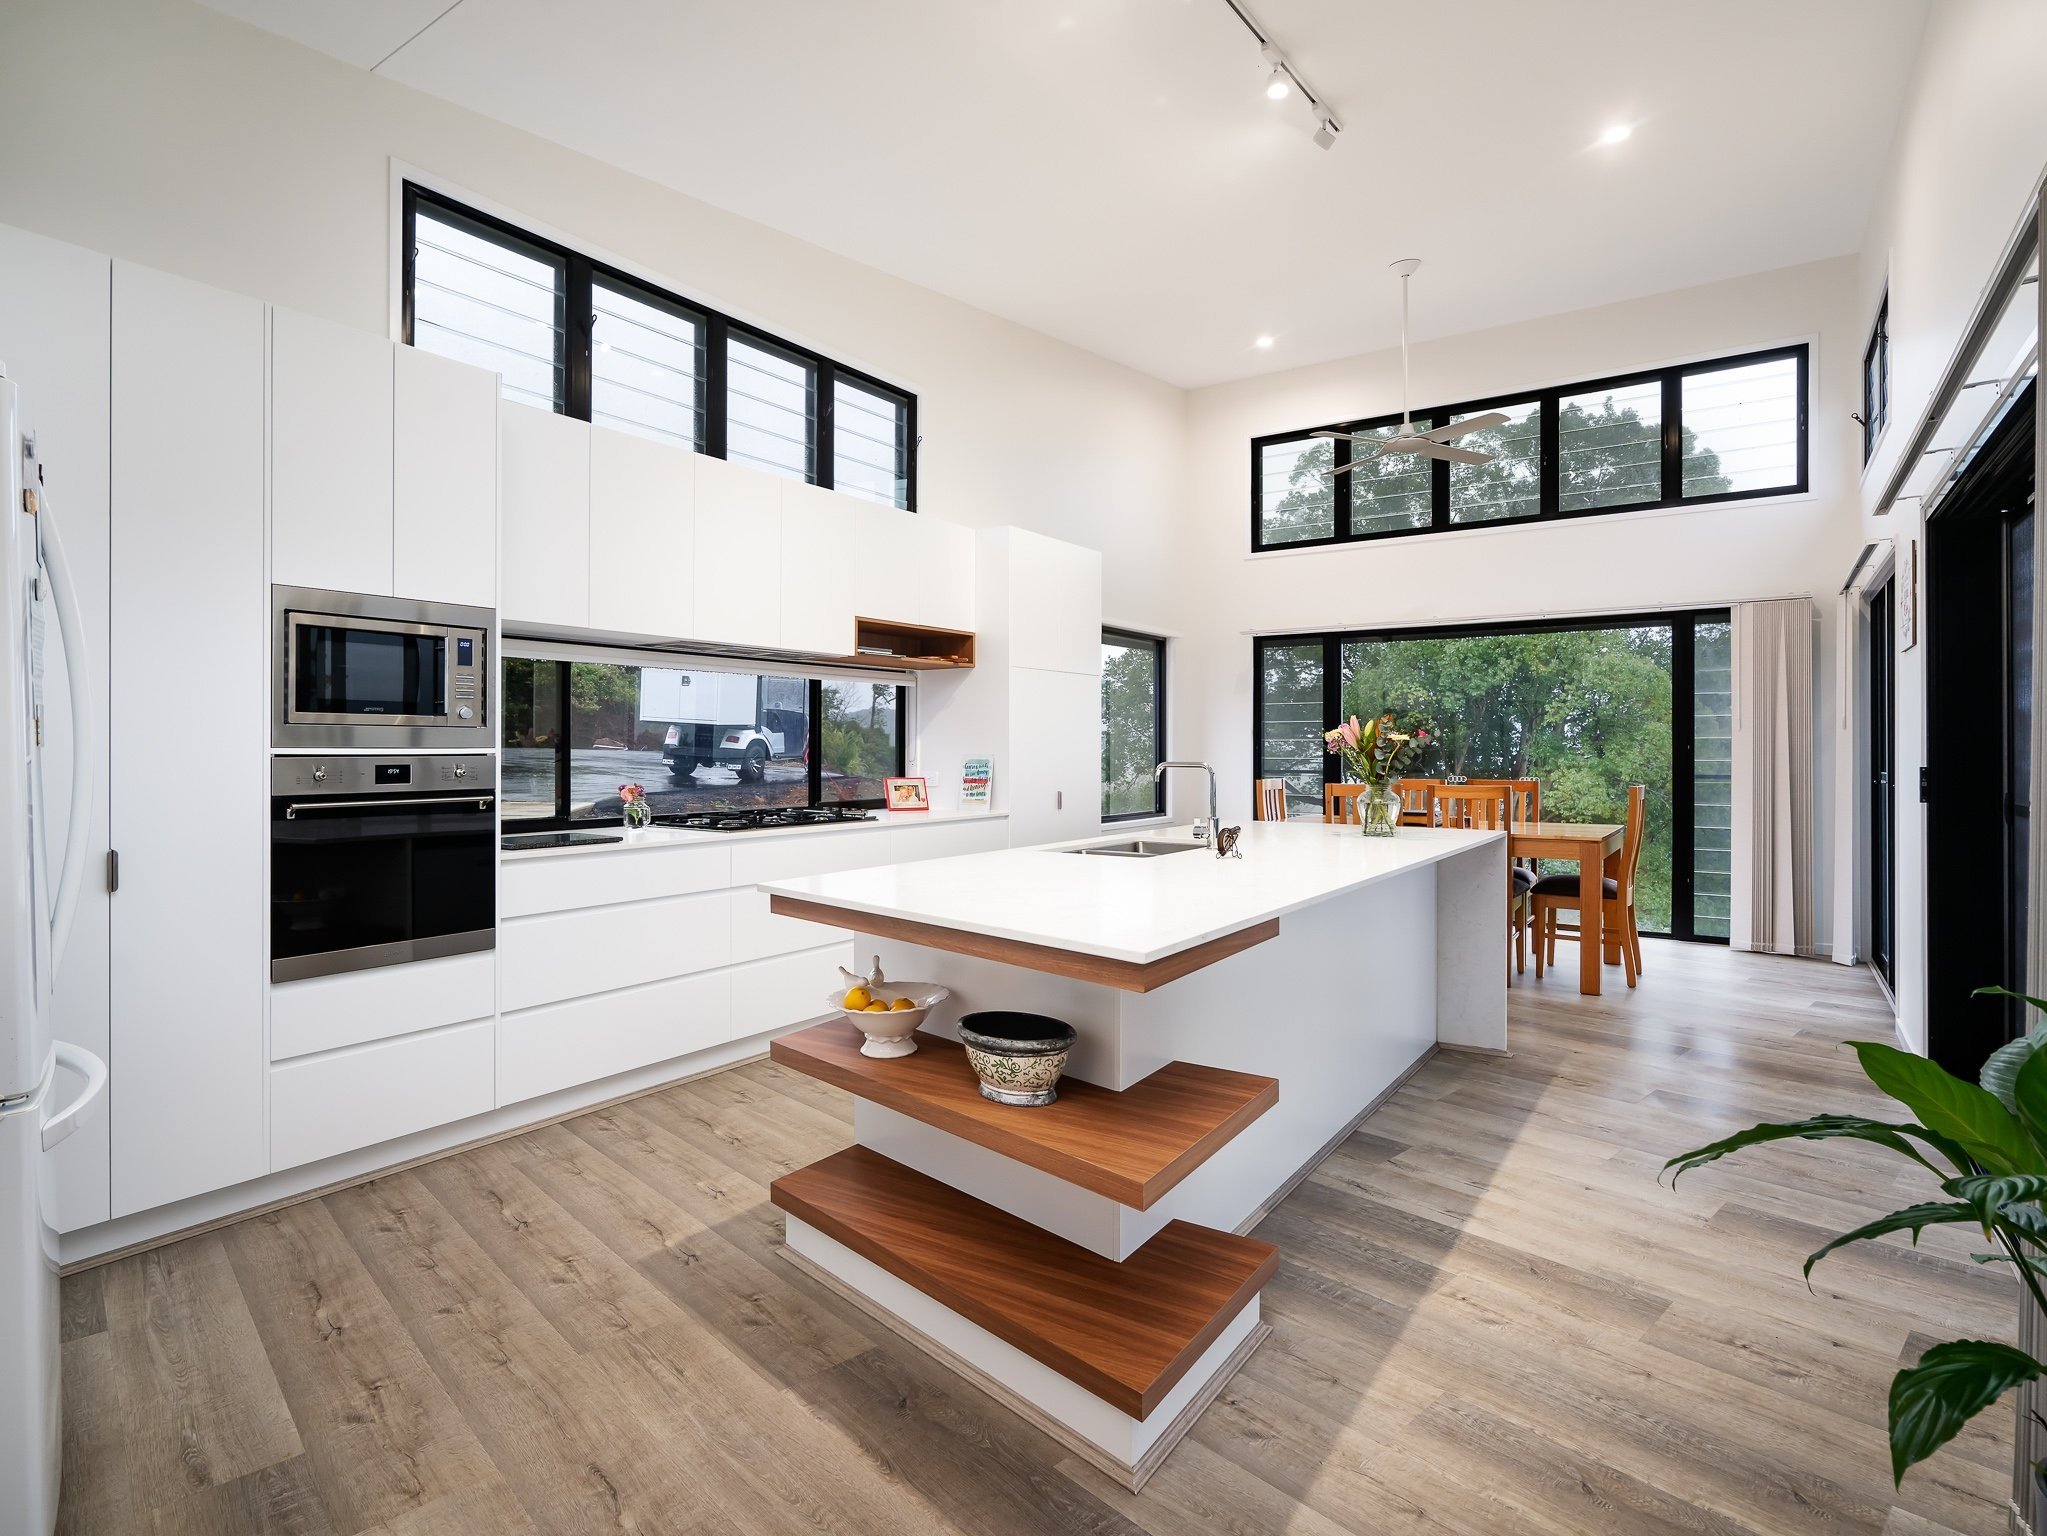 High level windows, minimal but functional kitchens